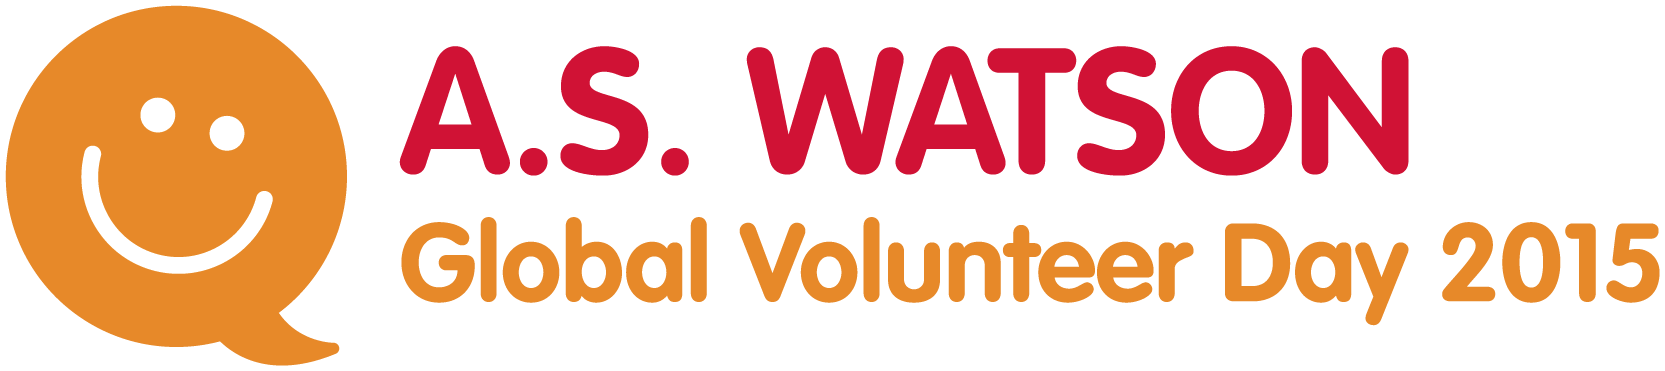 Global Volunteer Day 2015 – Change of Design